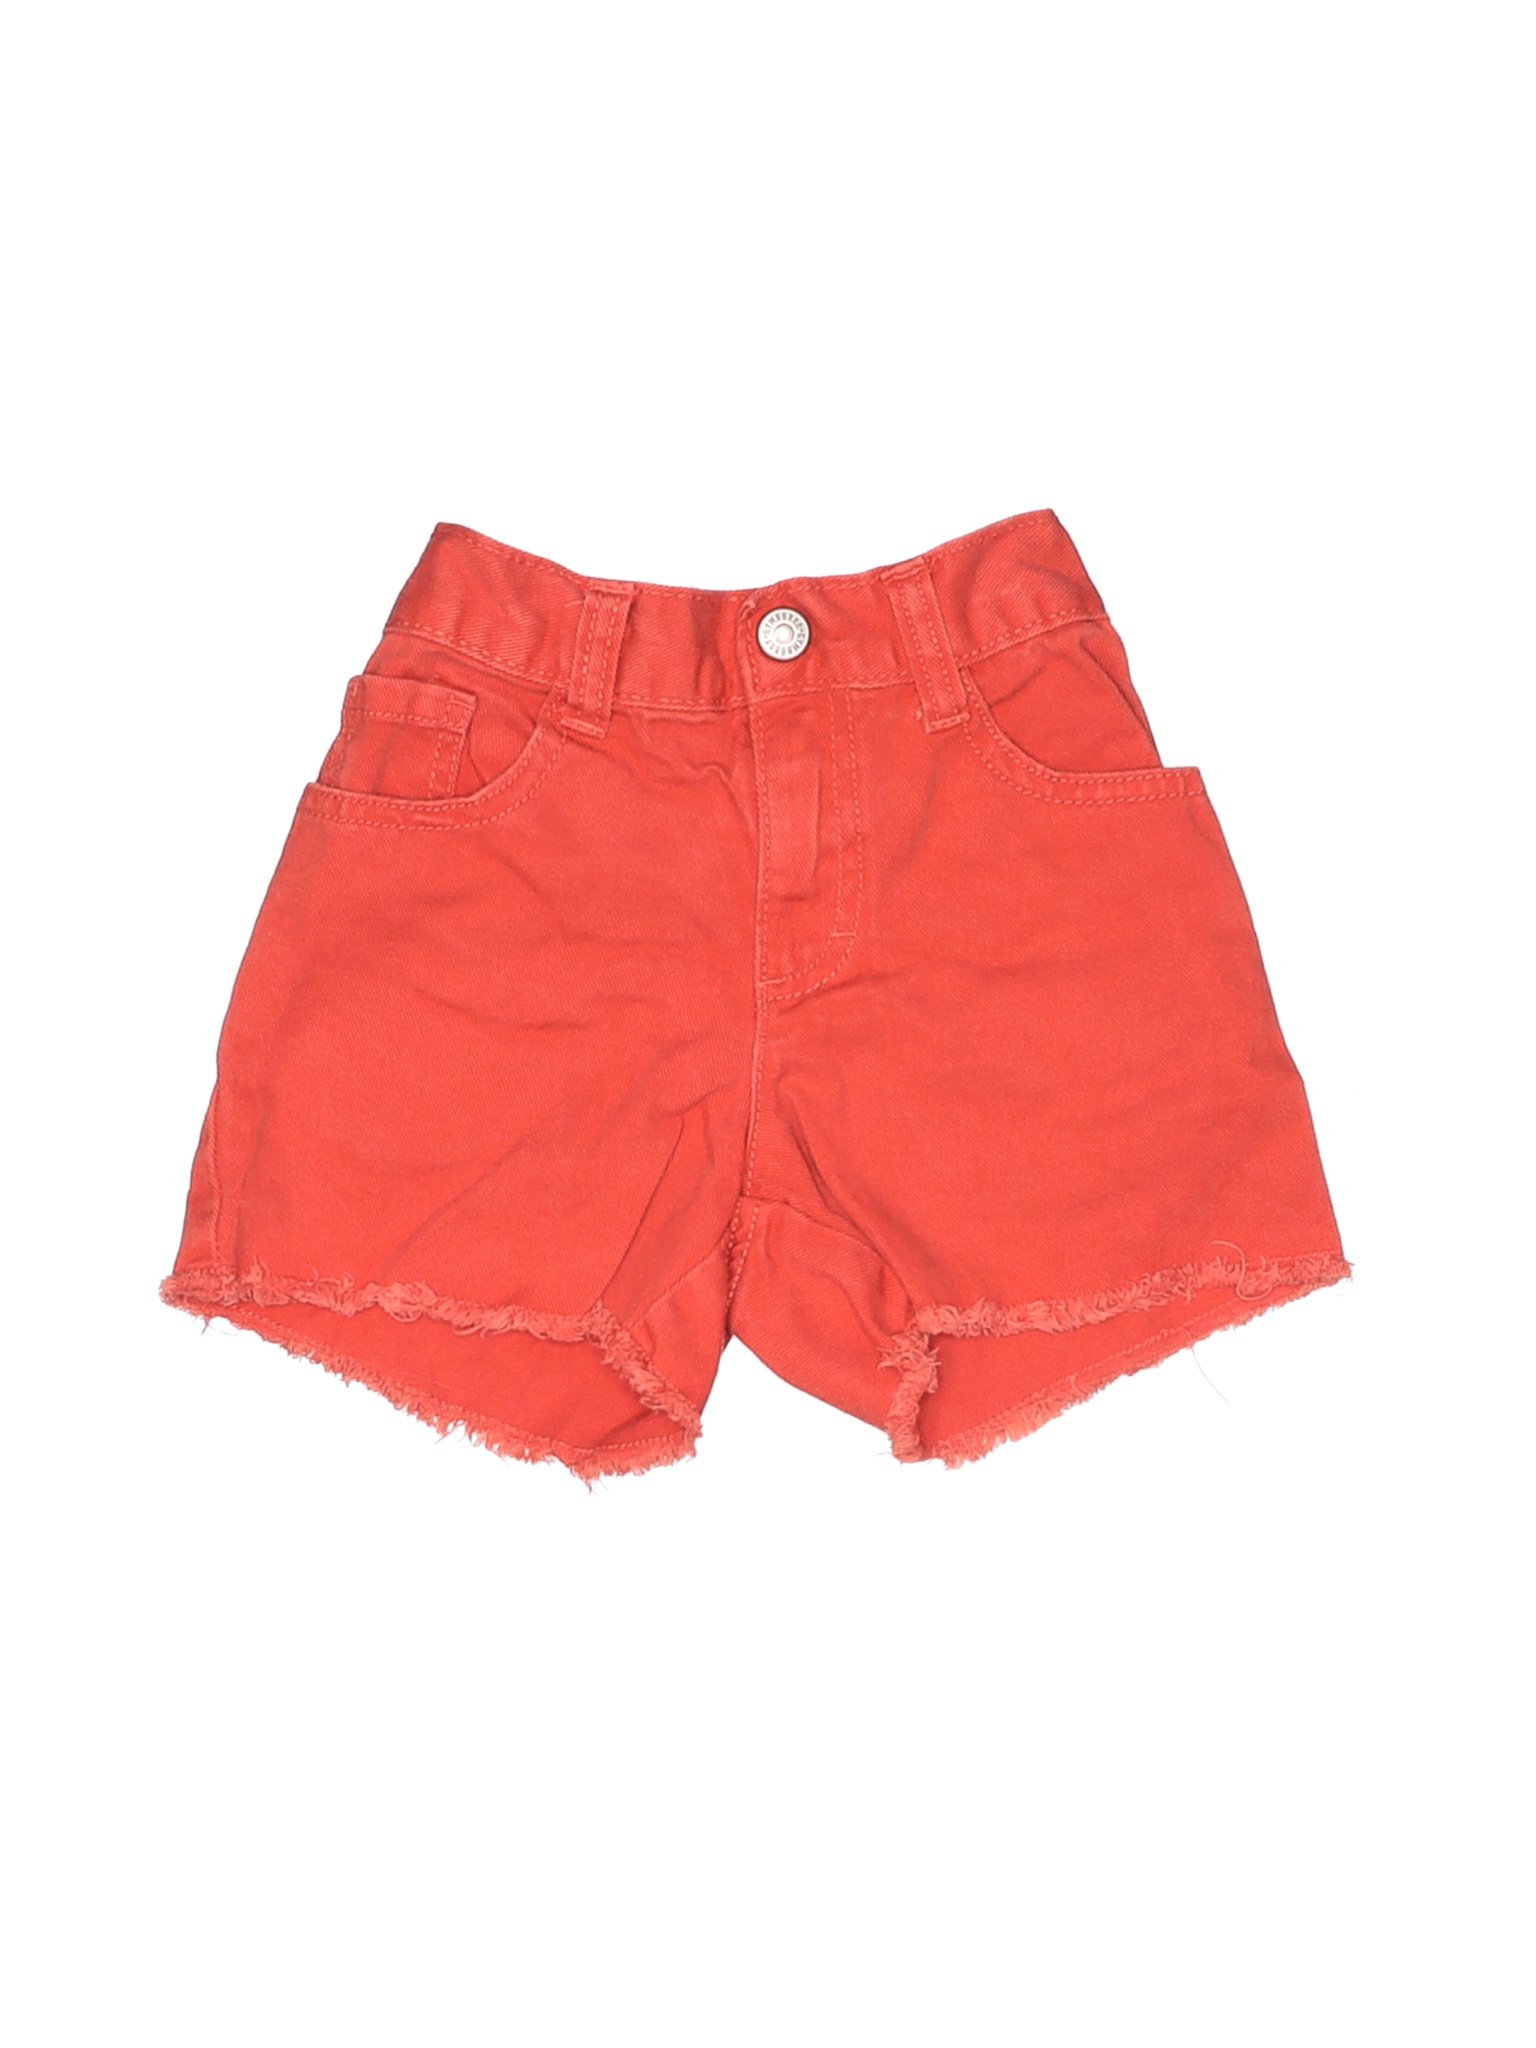 Gymboree Girls Pink Denim Shorts 5 | eBay